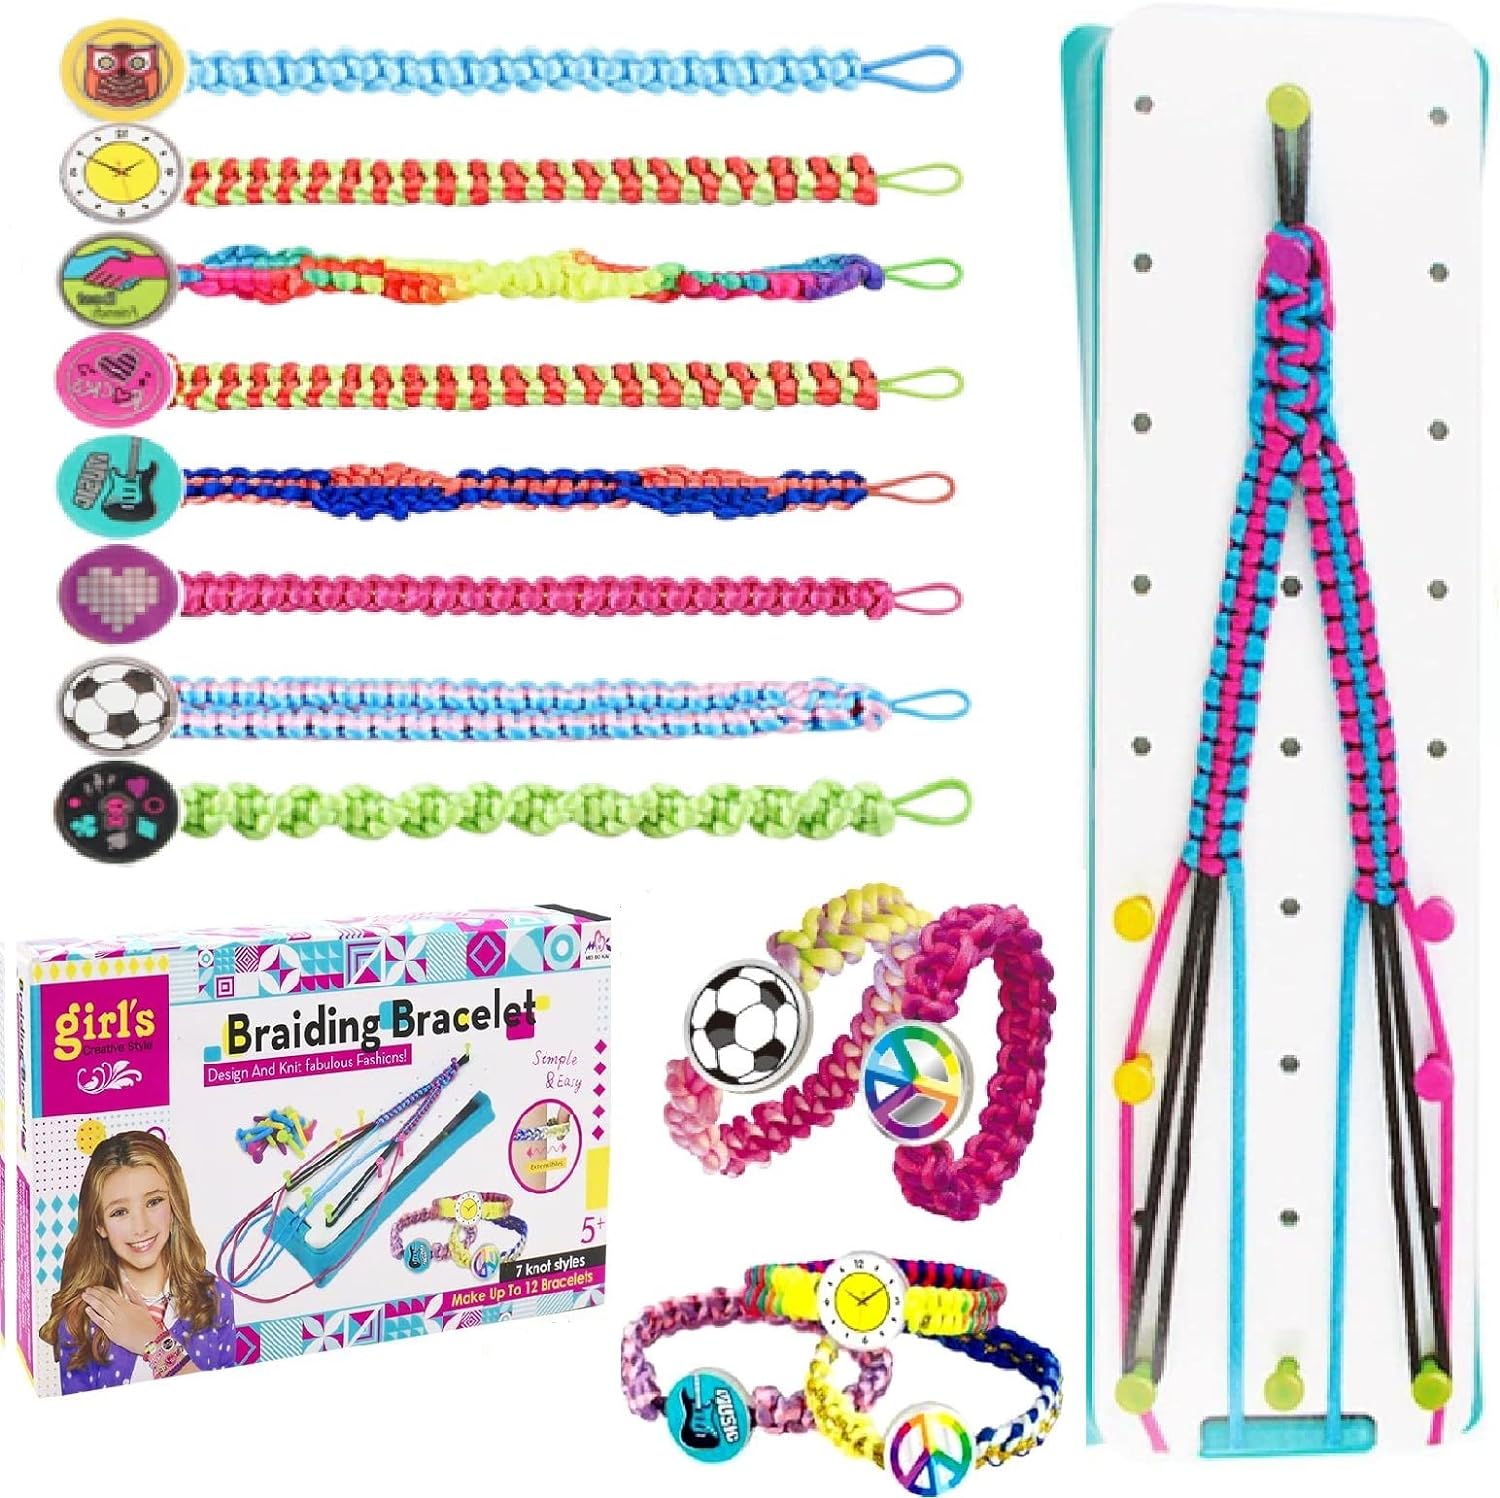 FREE 20 Bracelets Patterns E-Book DIY for Kids Large 161 Piece Bracelet/Jewelry Making Kit Best Birthday/Christmas Gifts Premium Friendship Bracelets Maker